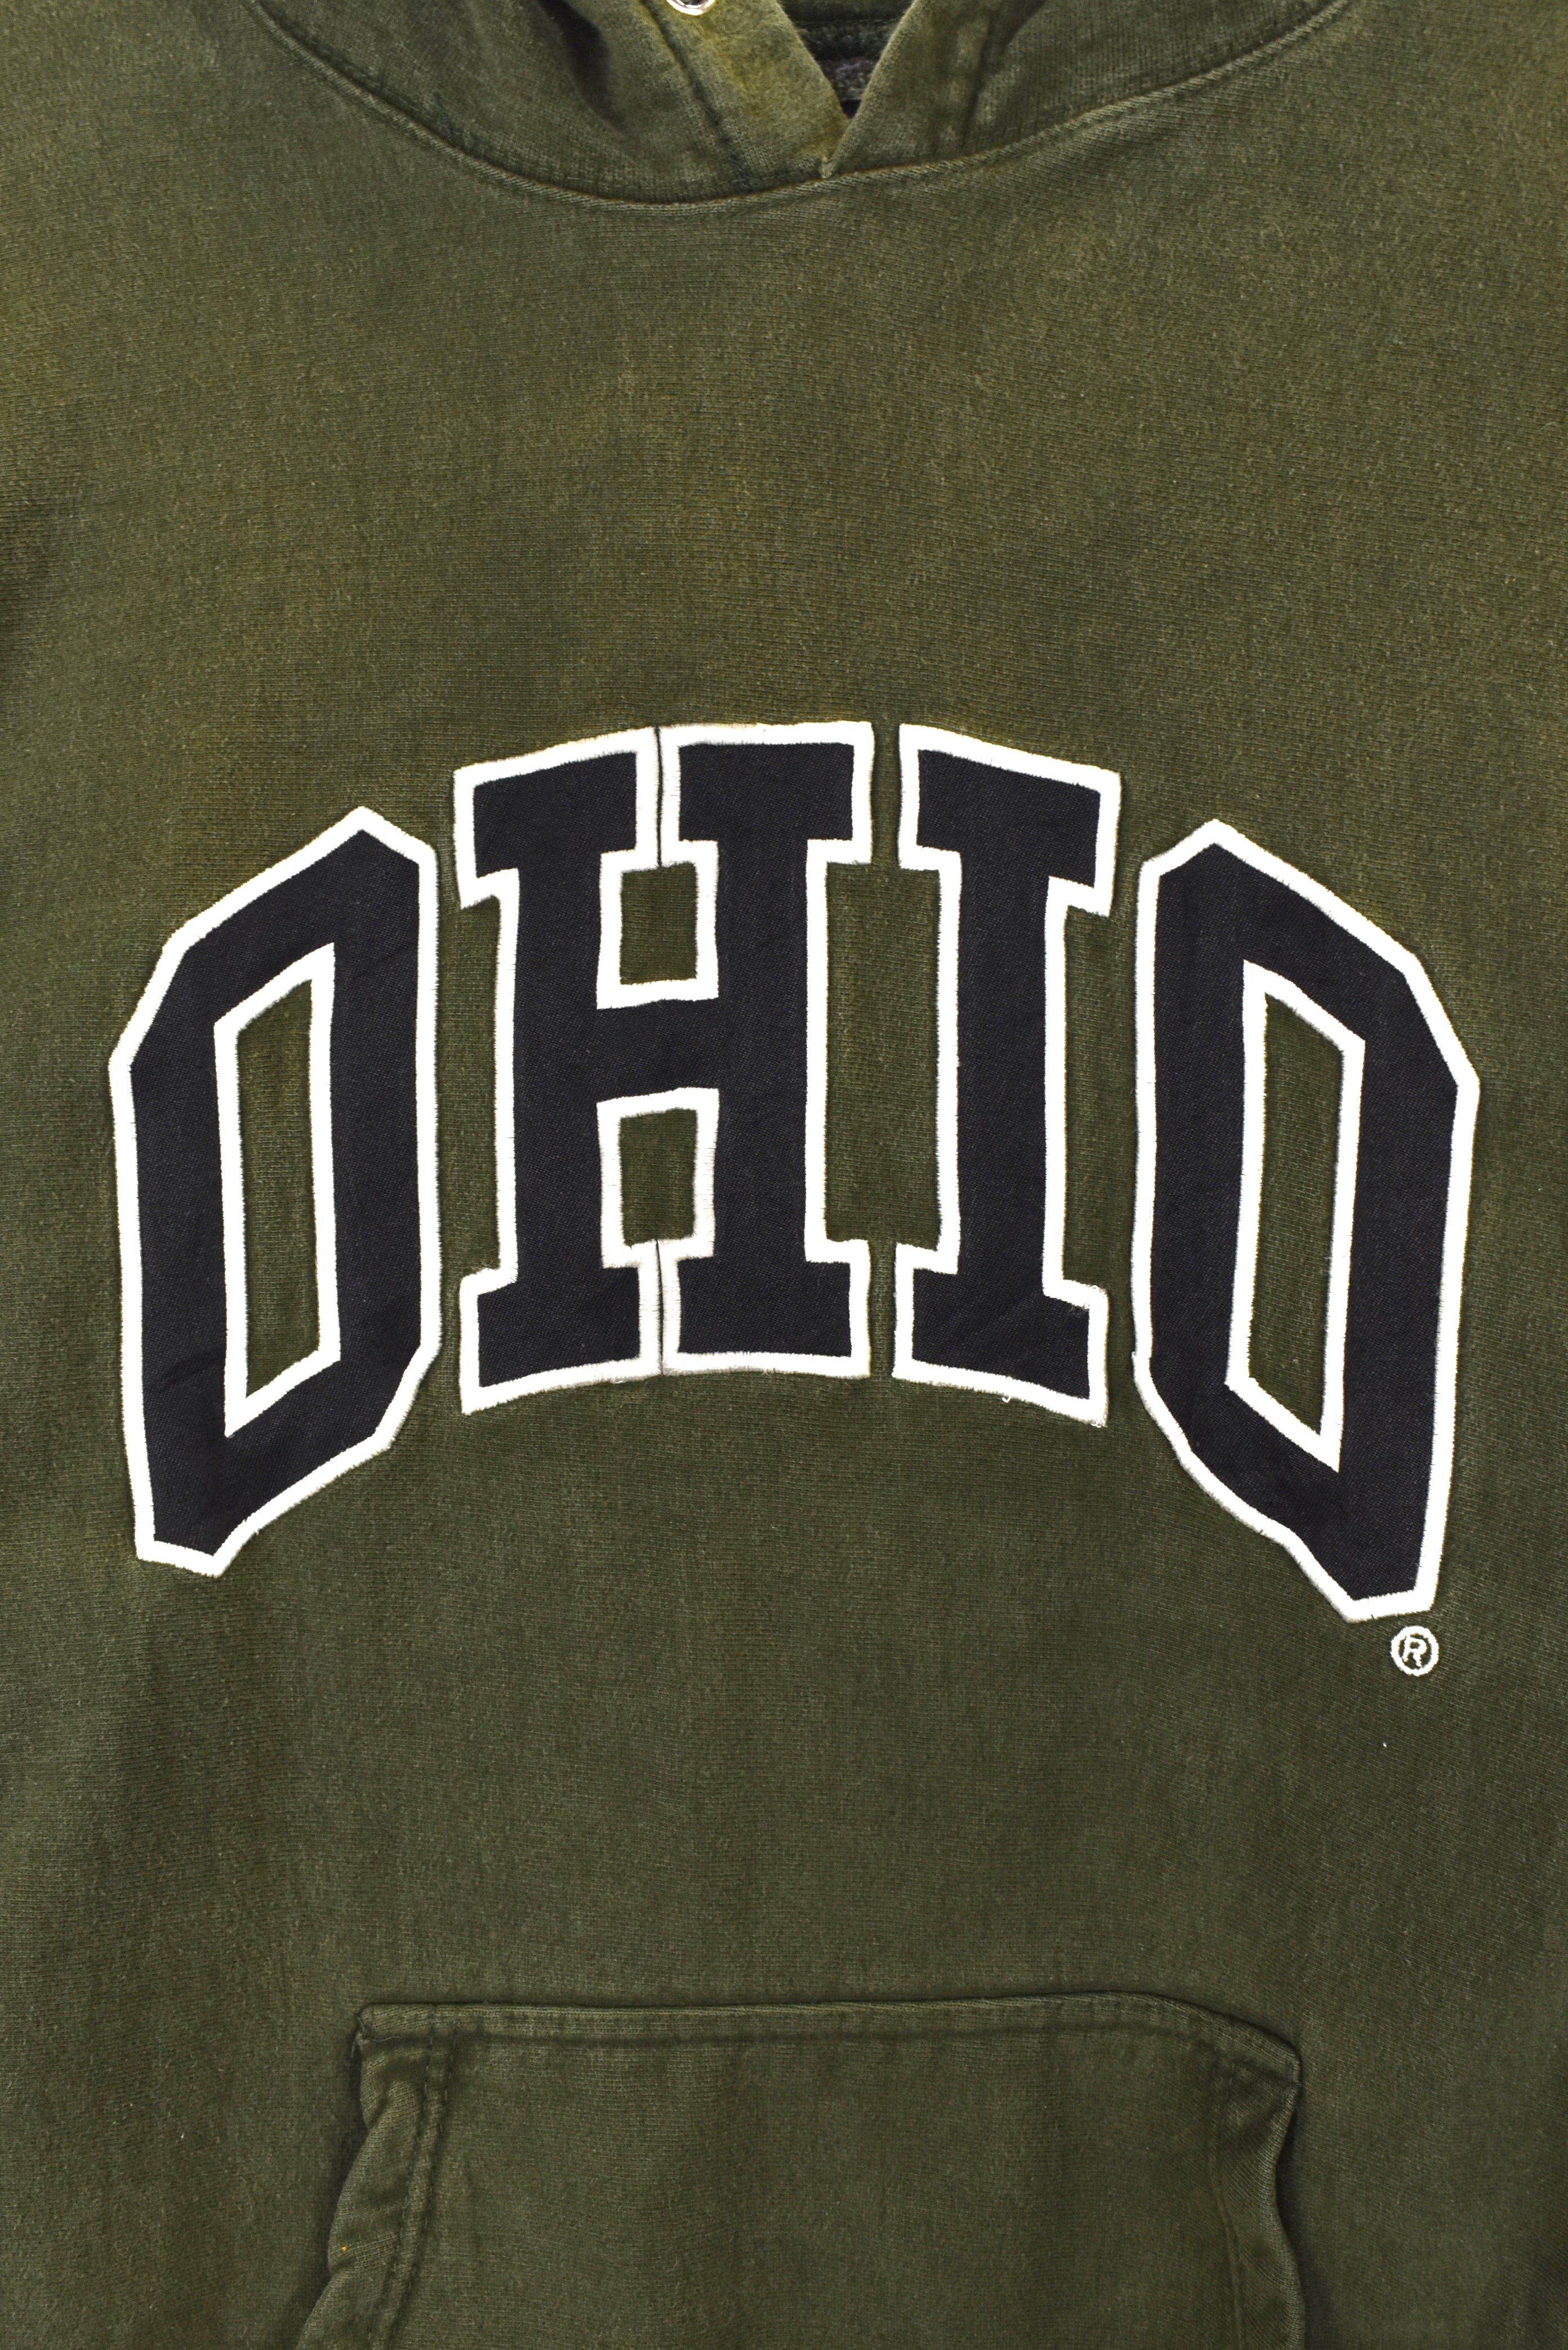 Vintage University Of Ohio hoodie, green embroidered sweatshirt - XL